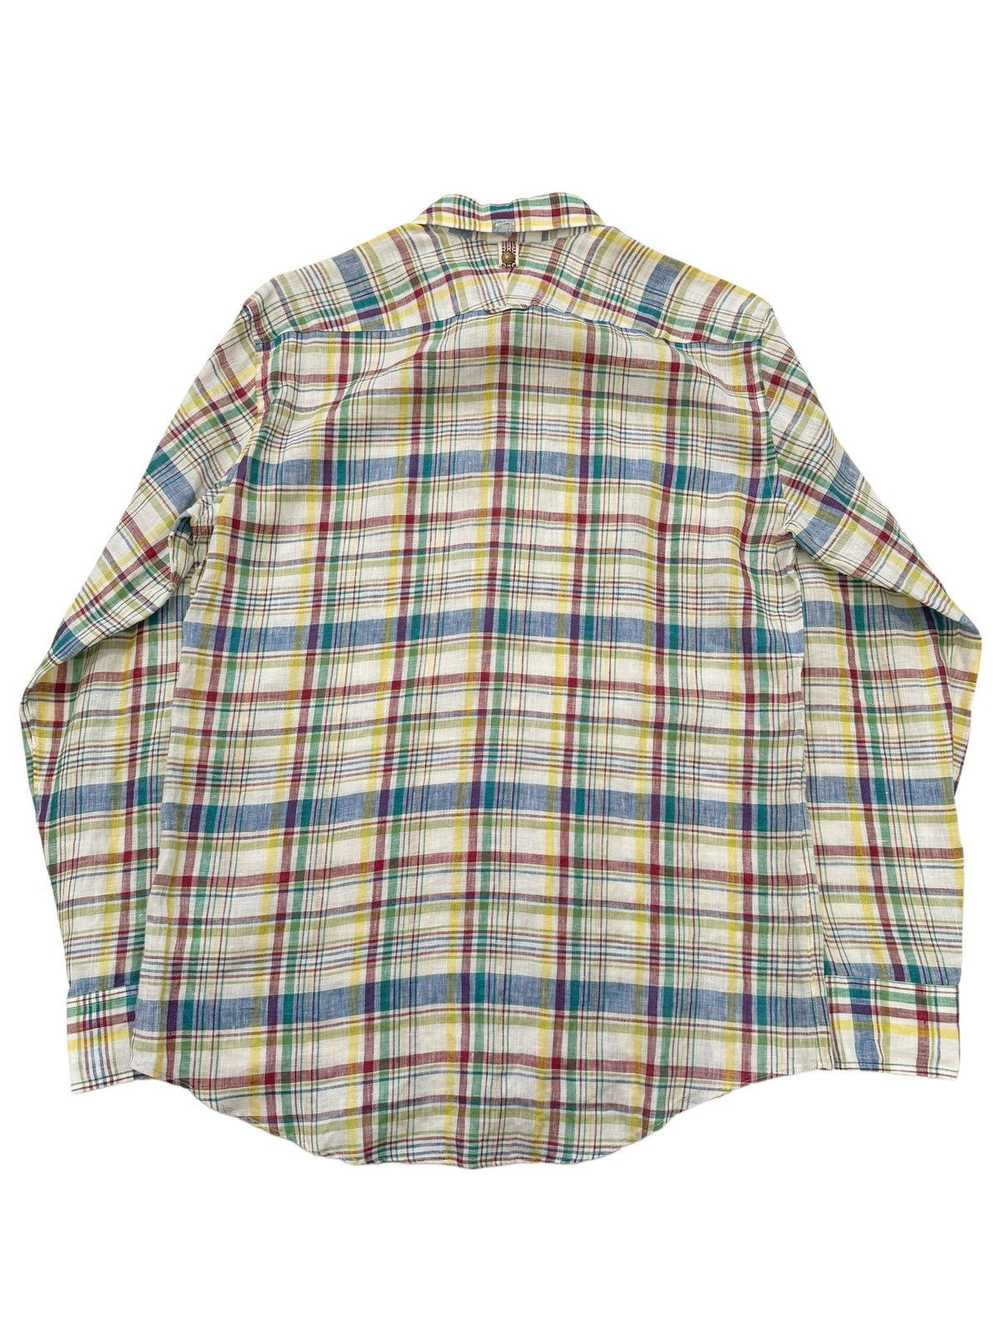 Visvim Sz1 12SS Madras Linen Plaid Shirt - image 5